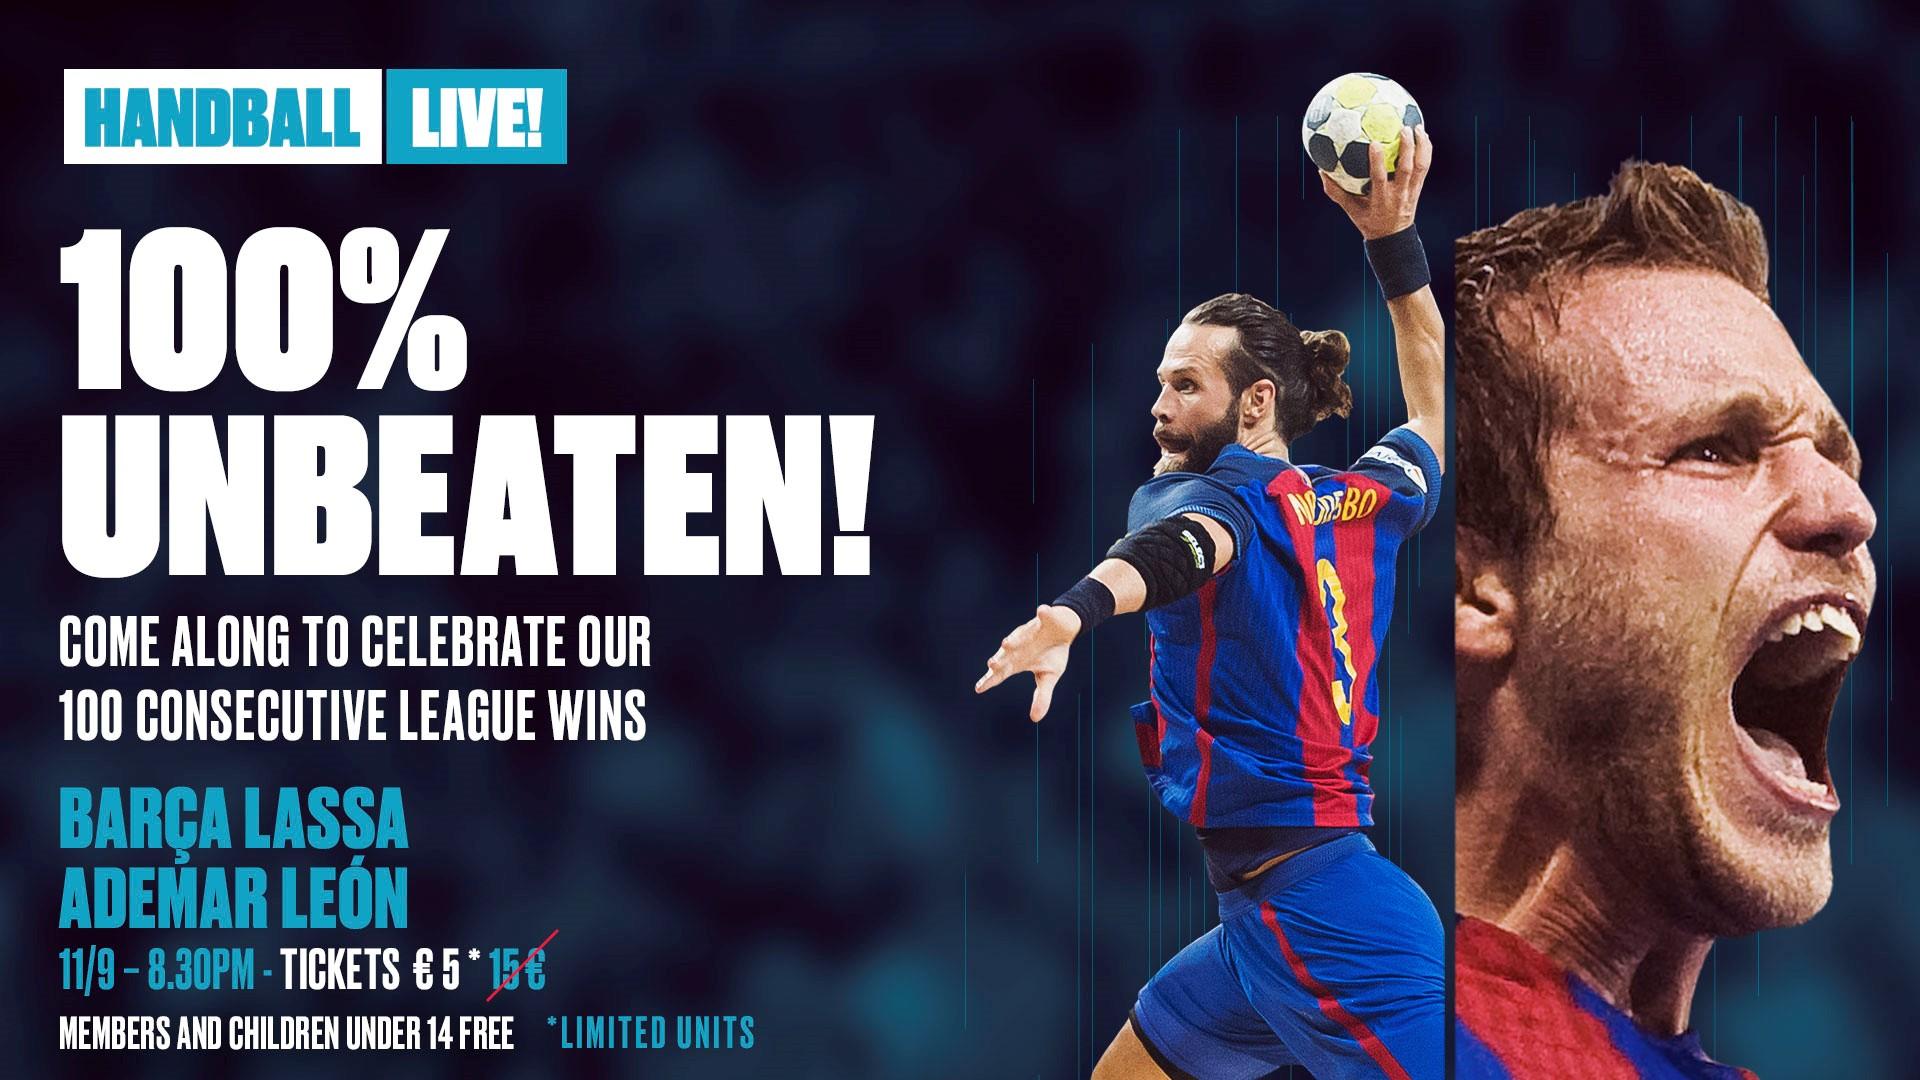 Come celebrate the FC Barcelona handball teams 100th consecutive league victory